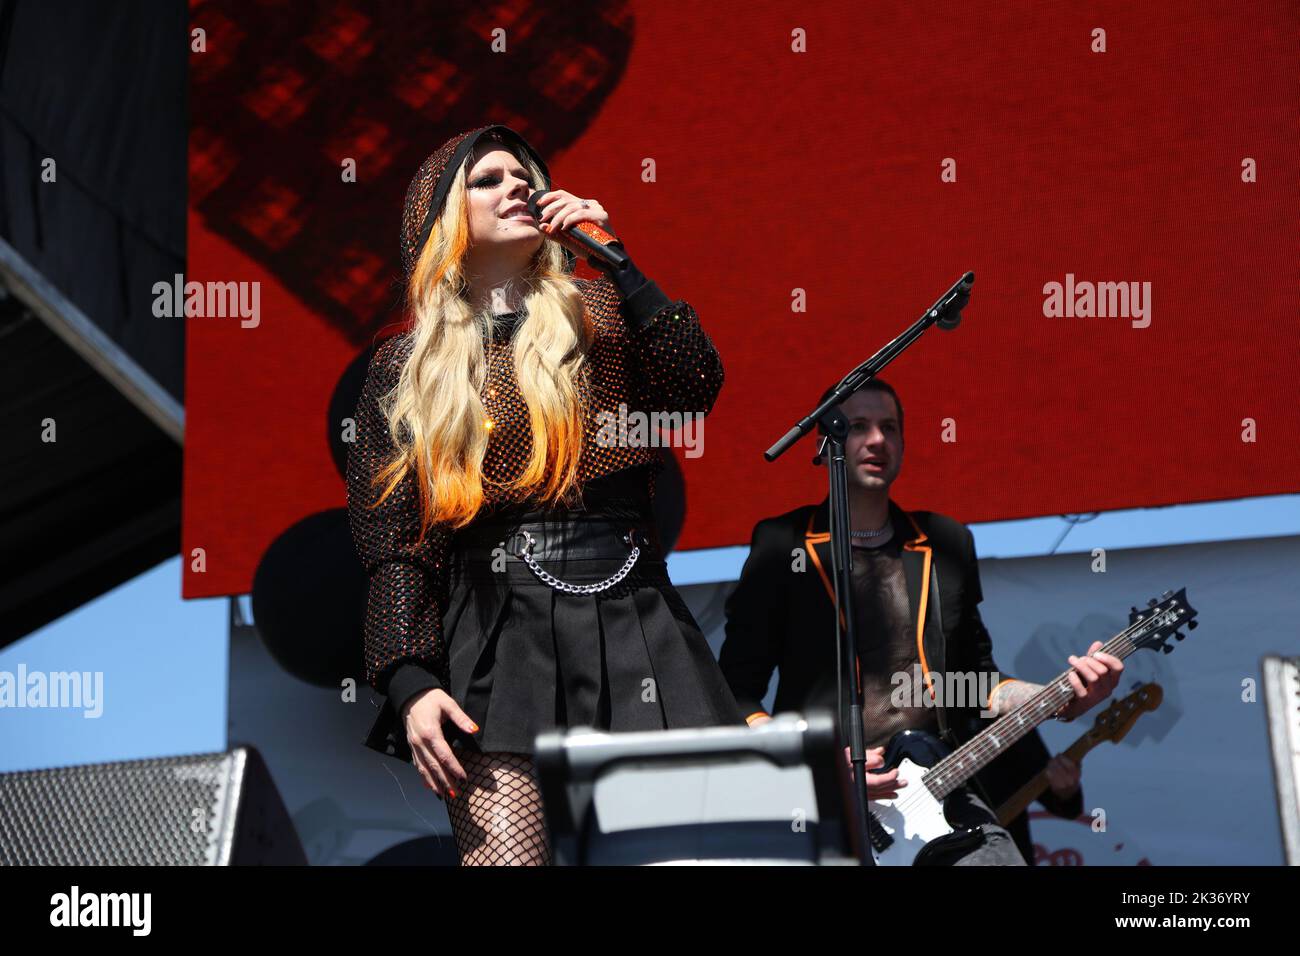 Las Vegas, Usa. 24. September 2022. Avril Lavigne spielt auf der Bühne während des iHeartRadio Music Festival Tageskonzerte um Area15 Uhr in Las Vegas, Nevada am Samstag, 24. September 2022. Foto von James Atoa/UPI Credit: UPI/Alamy Live News Stockfoto